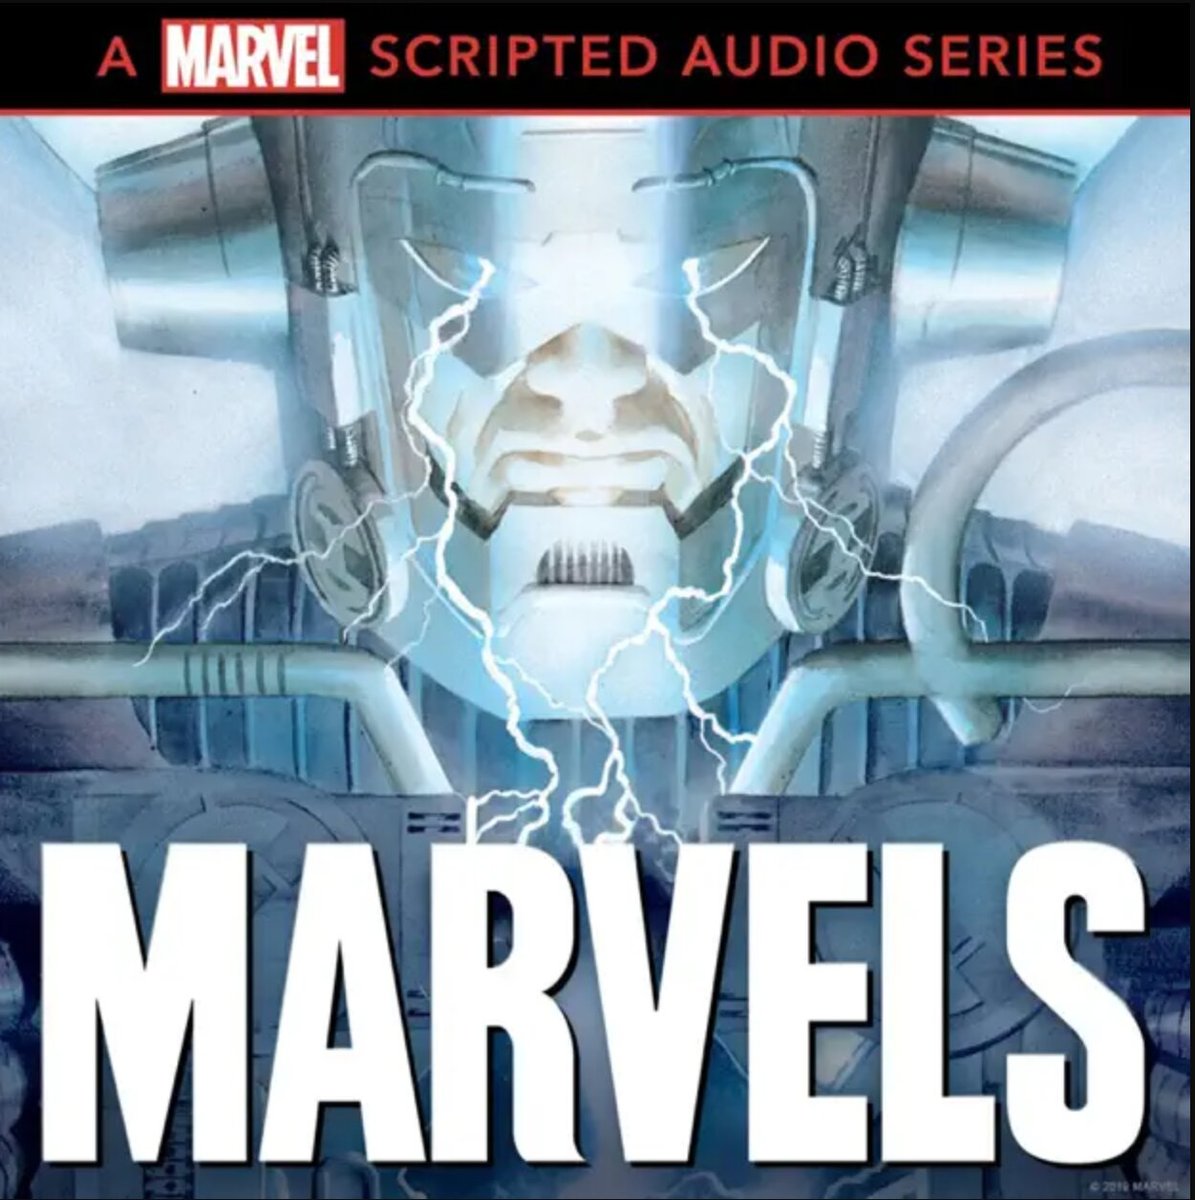 MARVELS art, featuring Galactus.